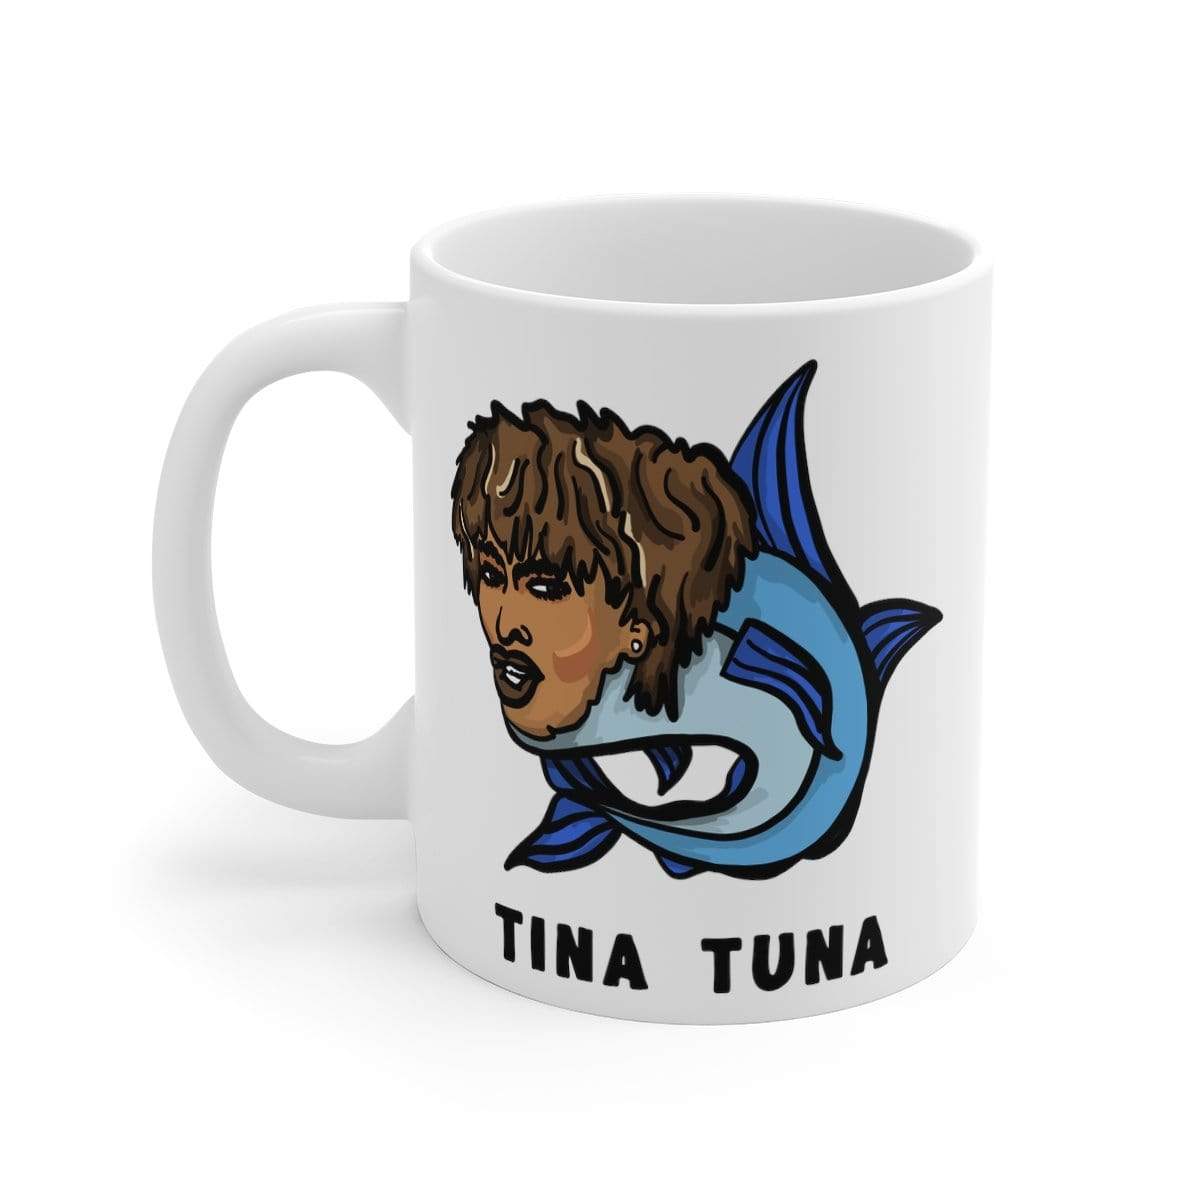 Tina Tuna 🐟 - Coffee Mug